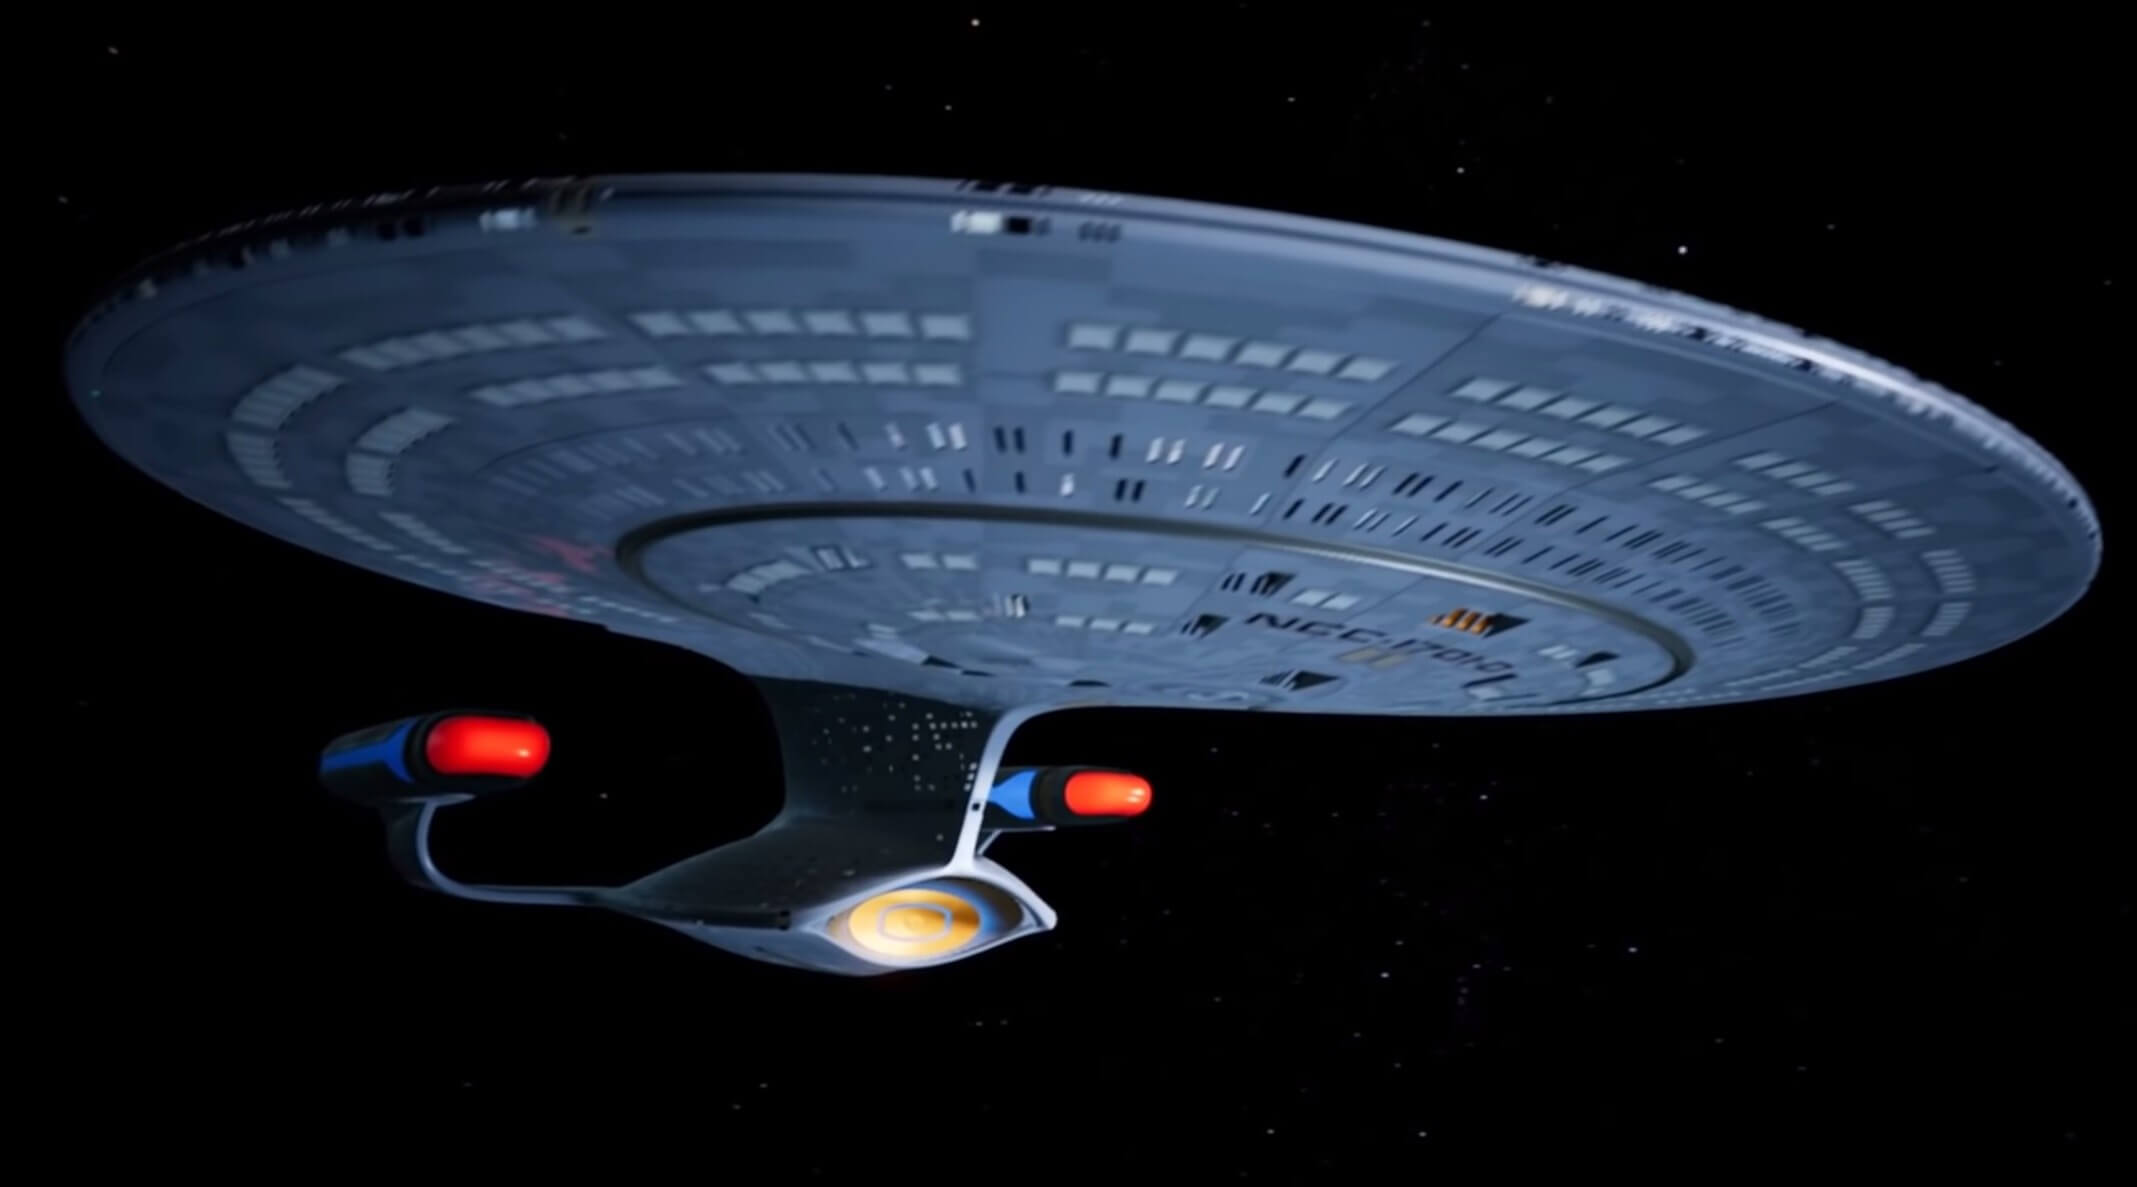 Fan's recreation of TNG's Enterprise gets photon torpedoed by CBS lawyers